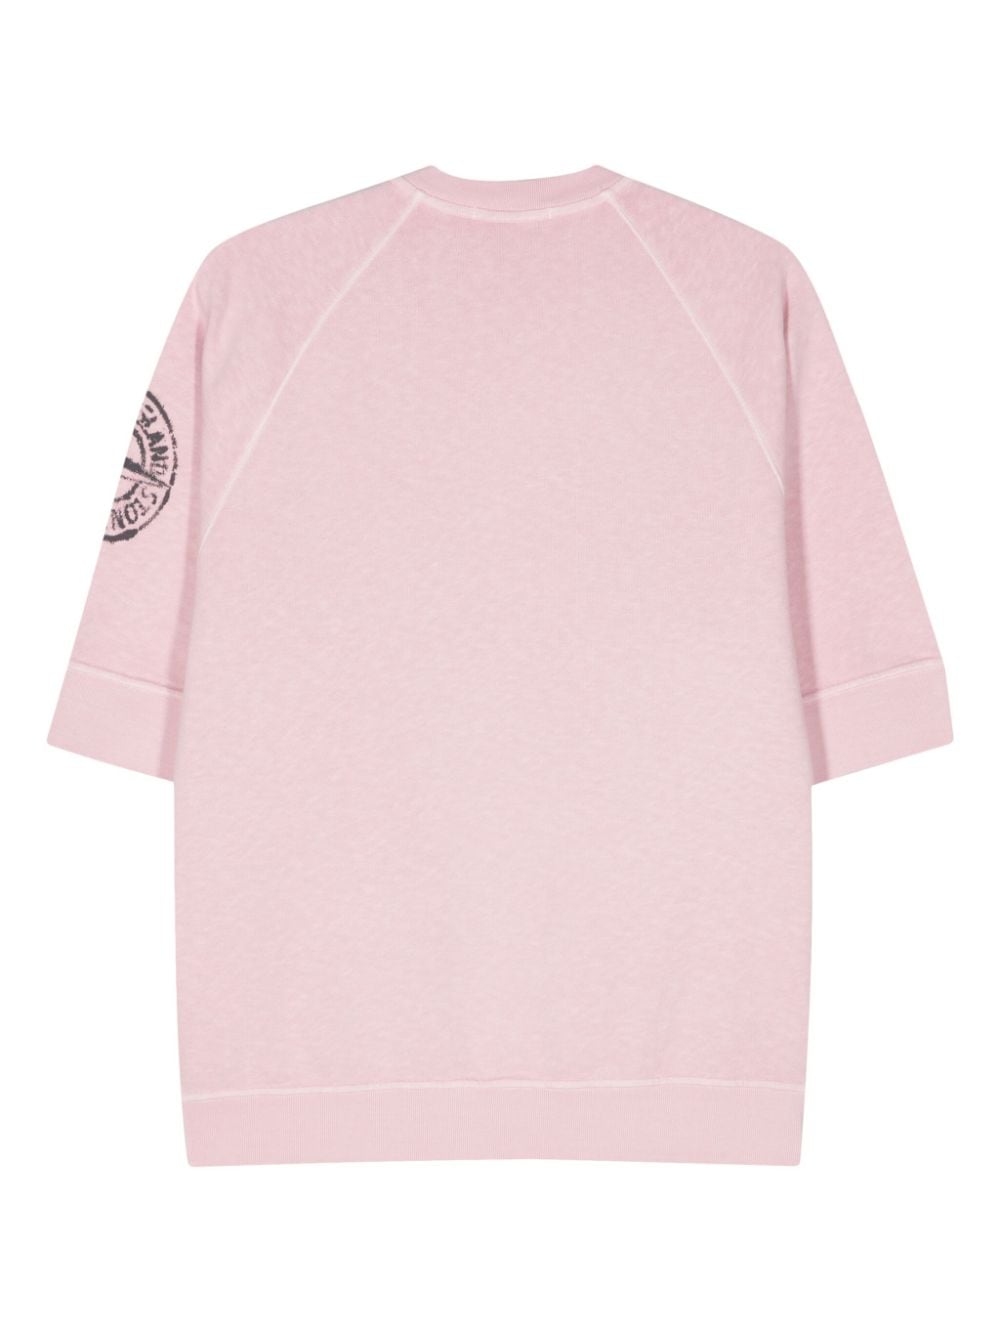 Stone Island 'Old Treatment' cotton T-shirt - Roze